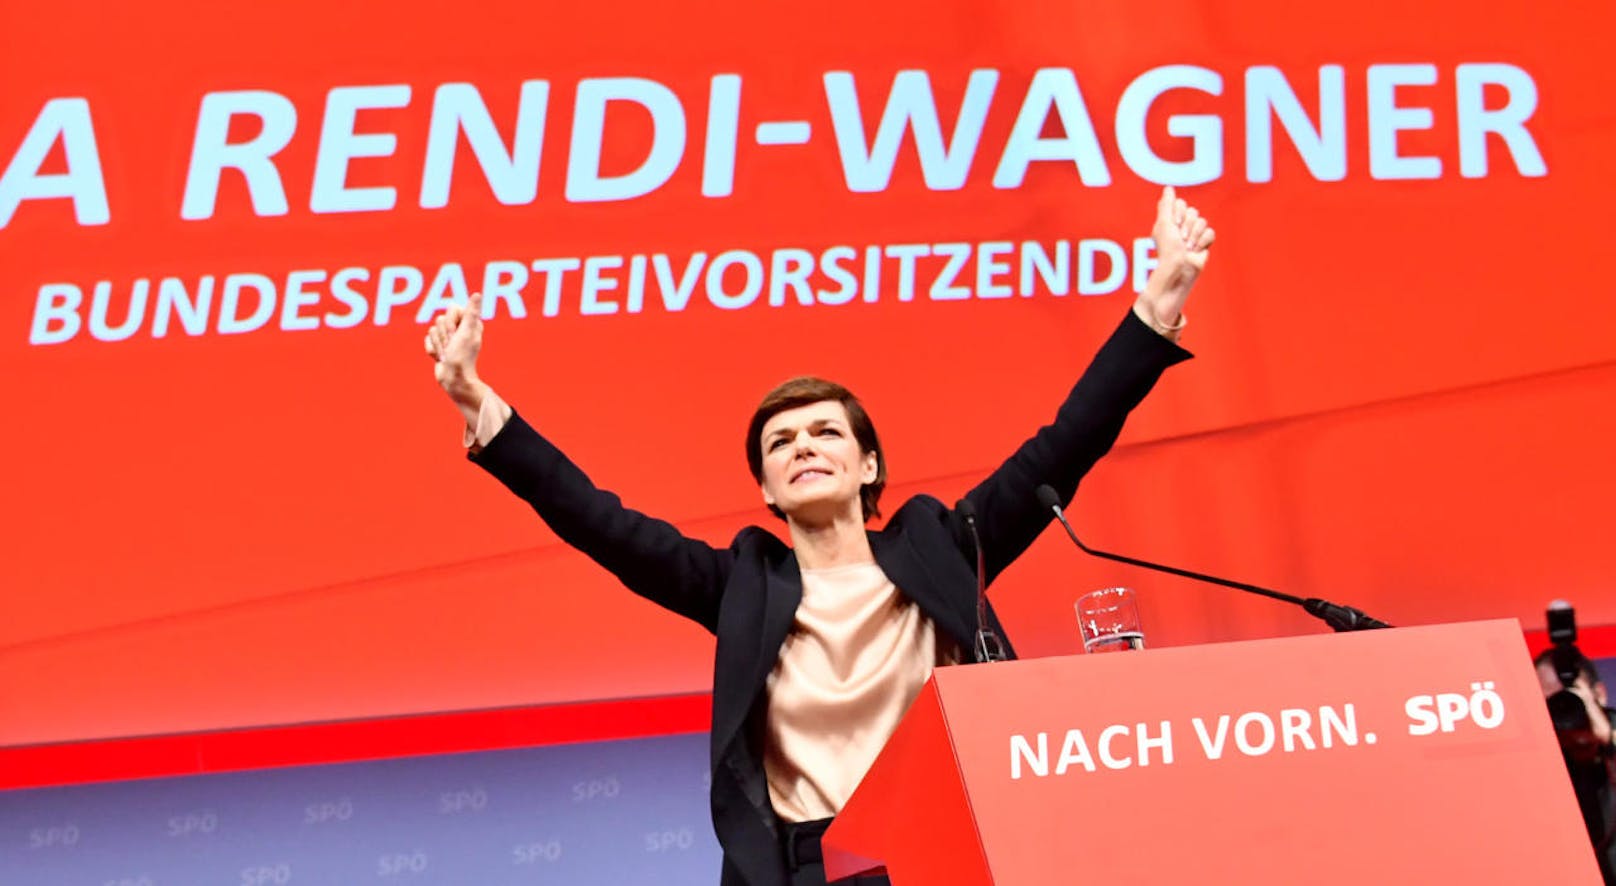 Pamela Rendi-Wagner beim Bundesparteitag der SPÖ in Wels